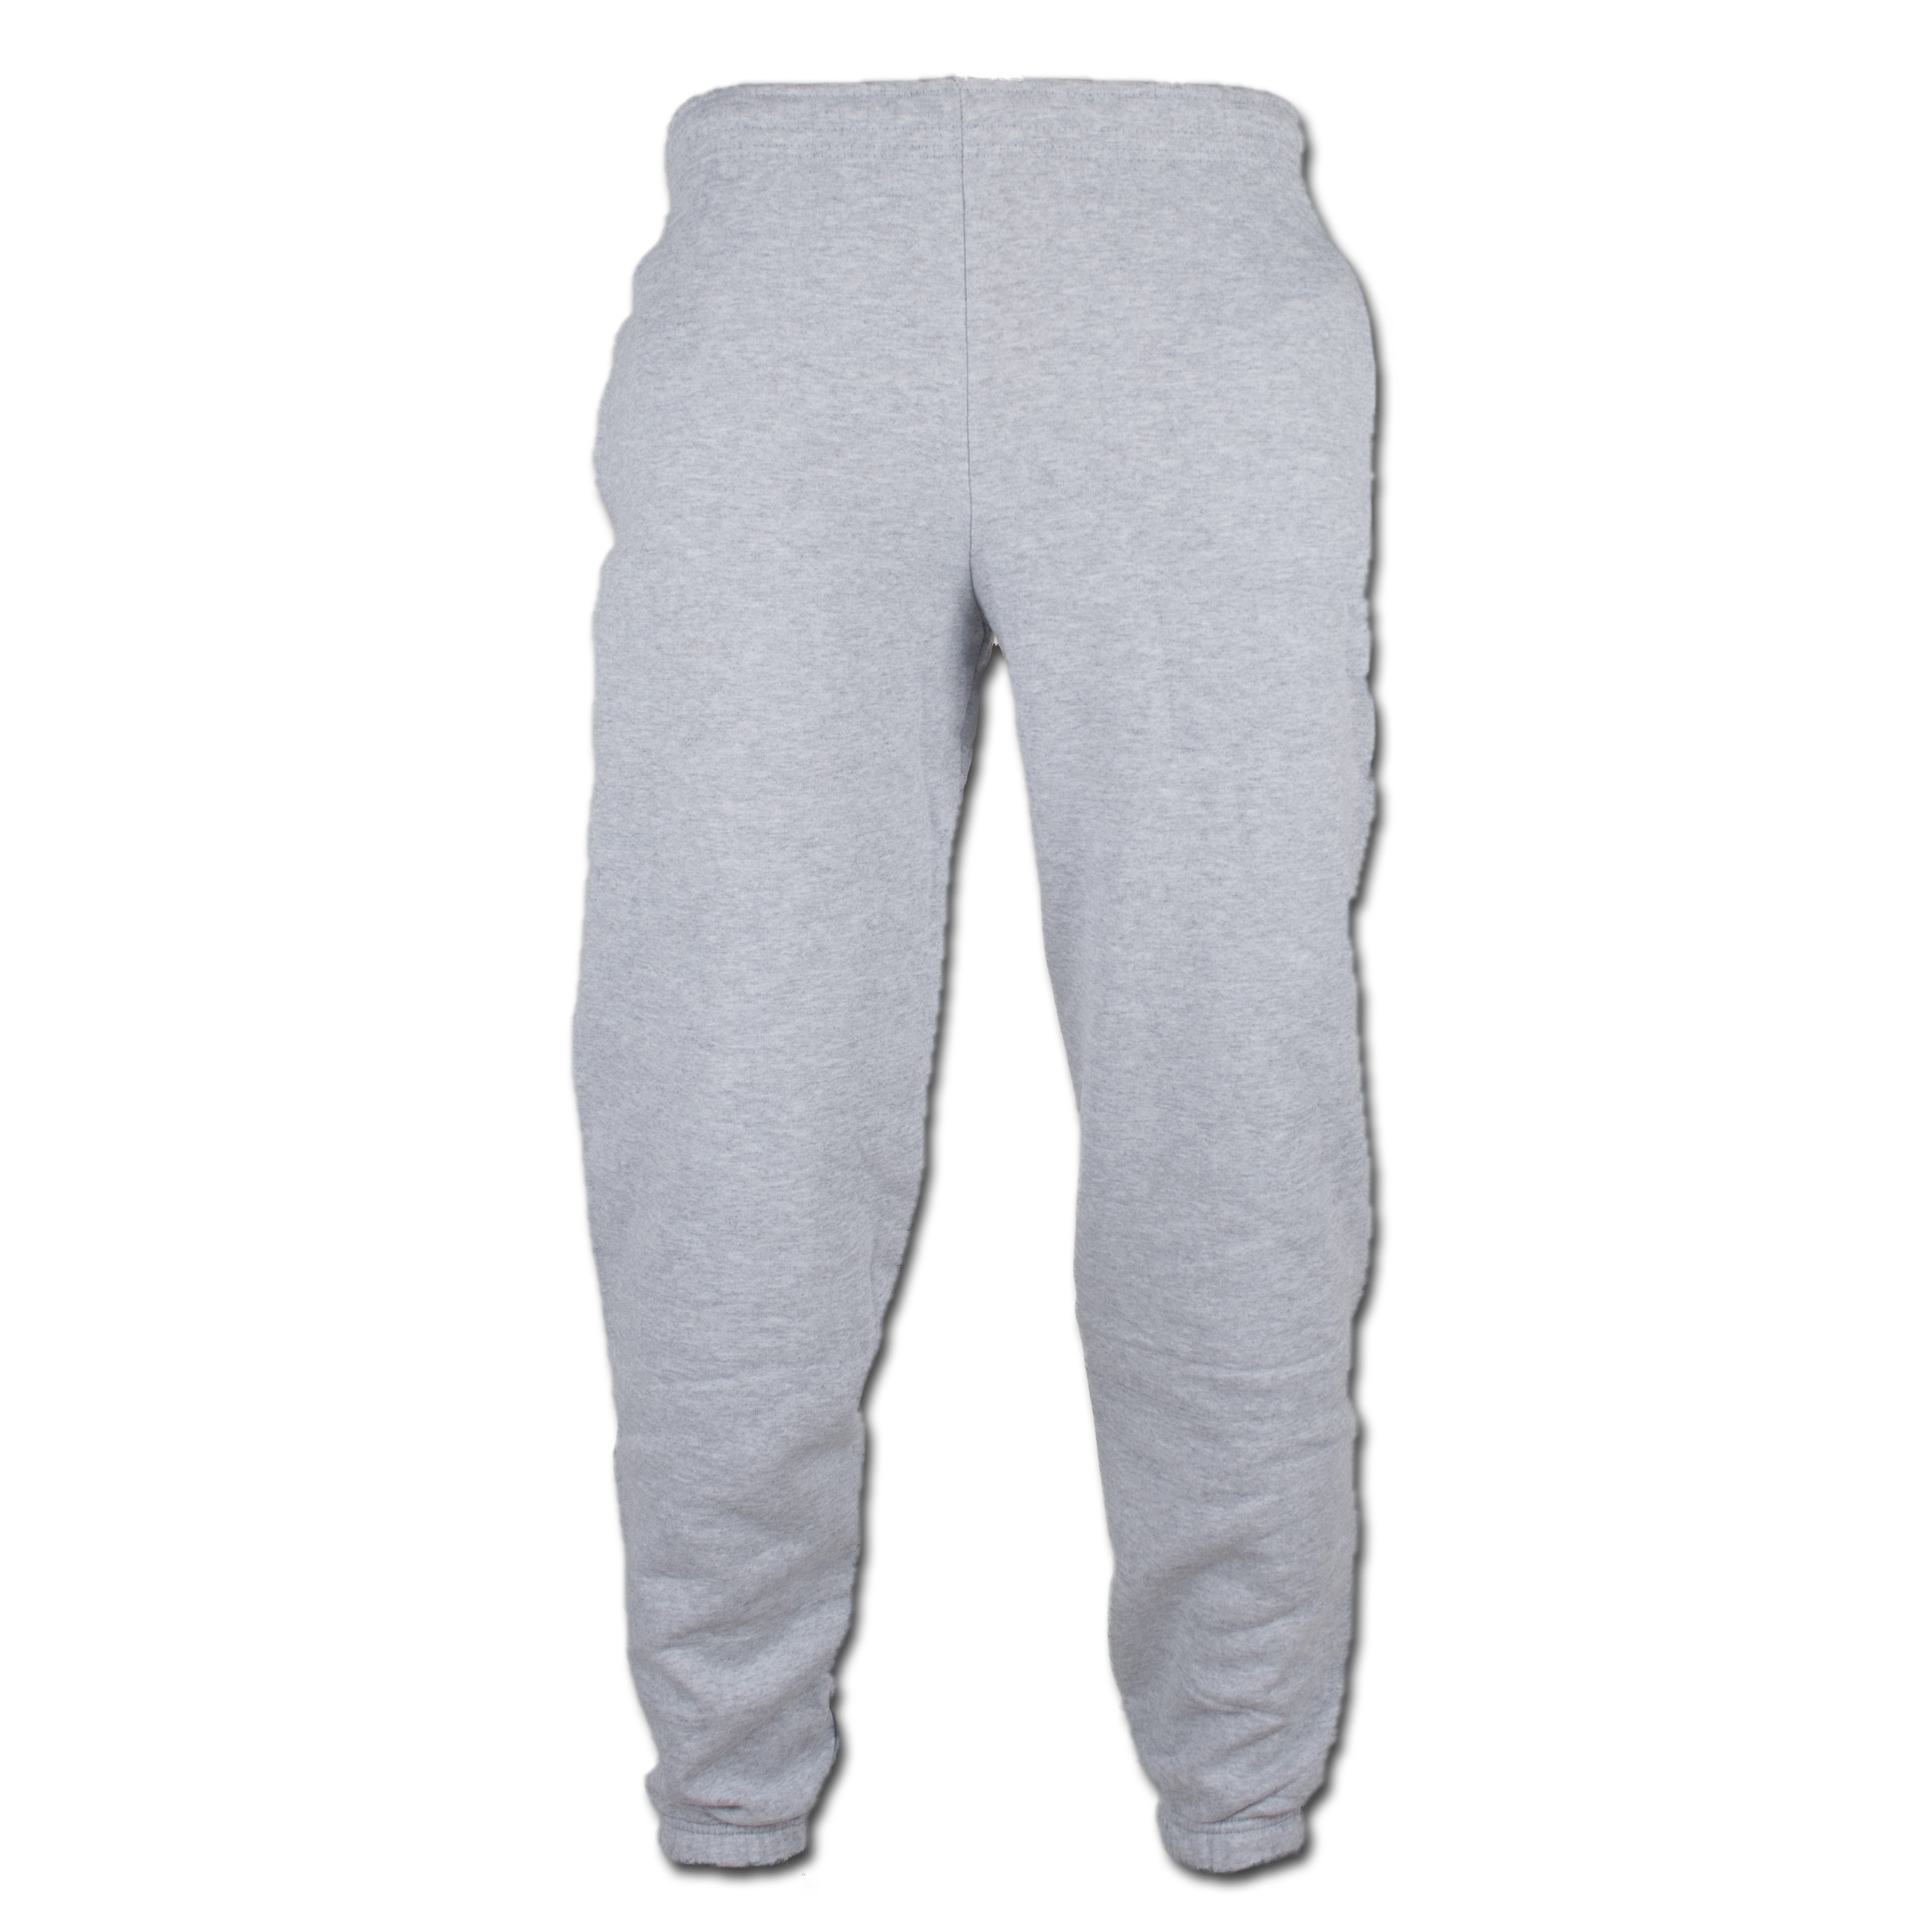 Sweatpants gray | Sweatpants gray | Pants | Trousers | Men | Clothing